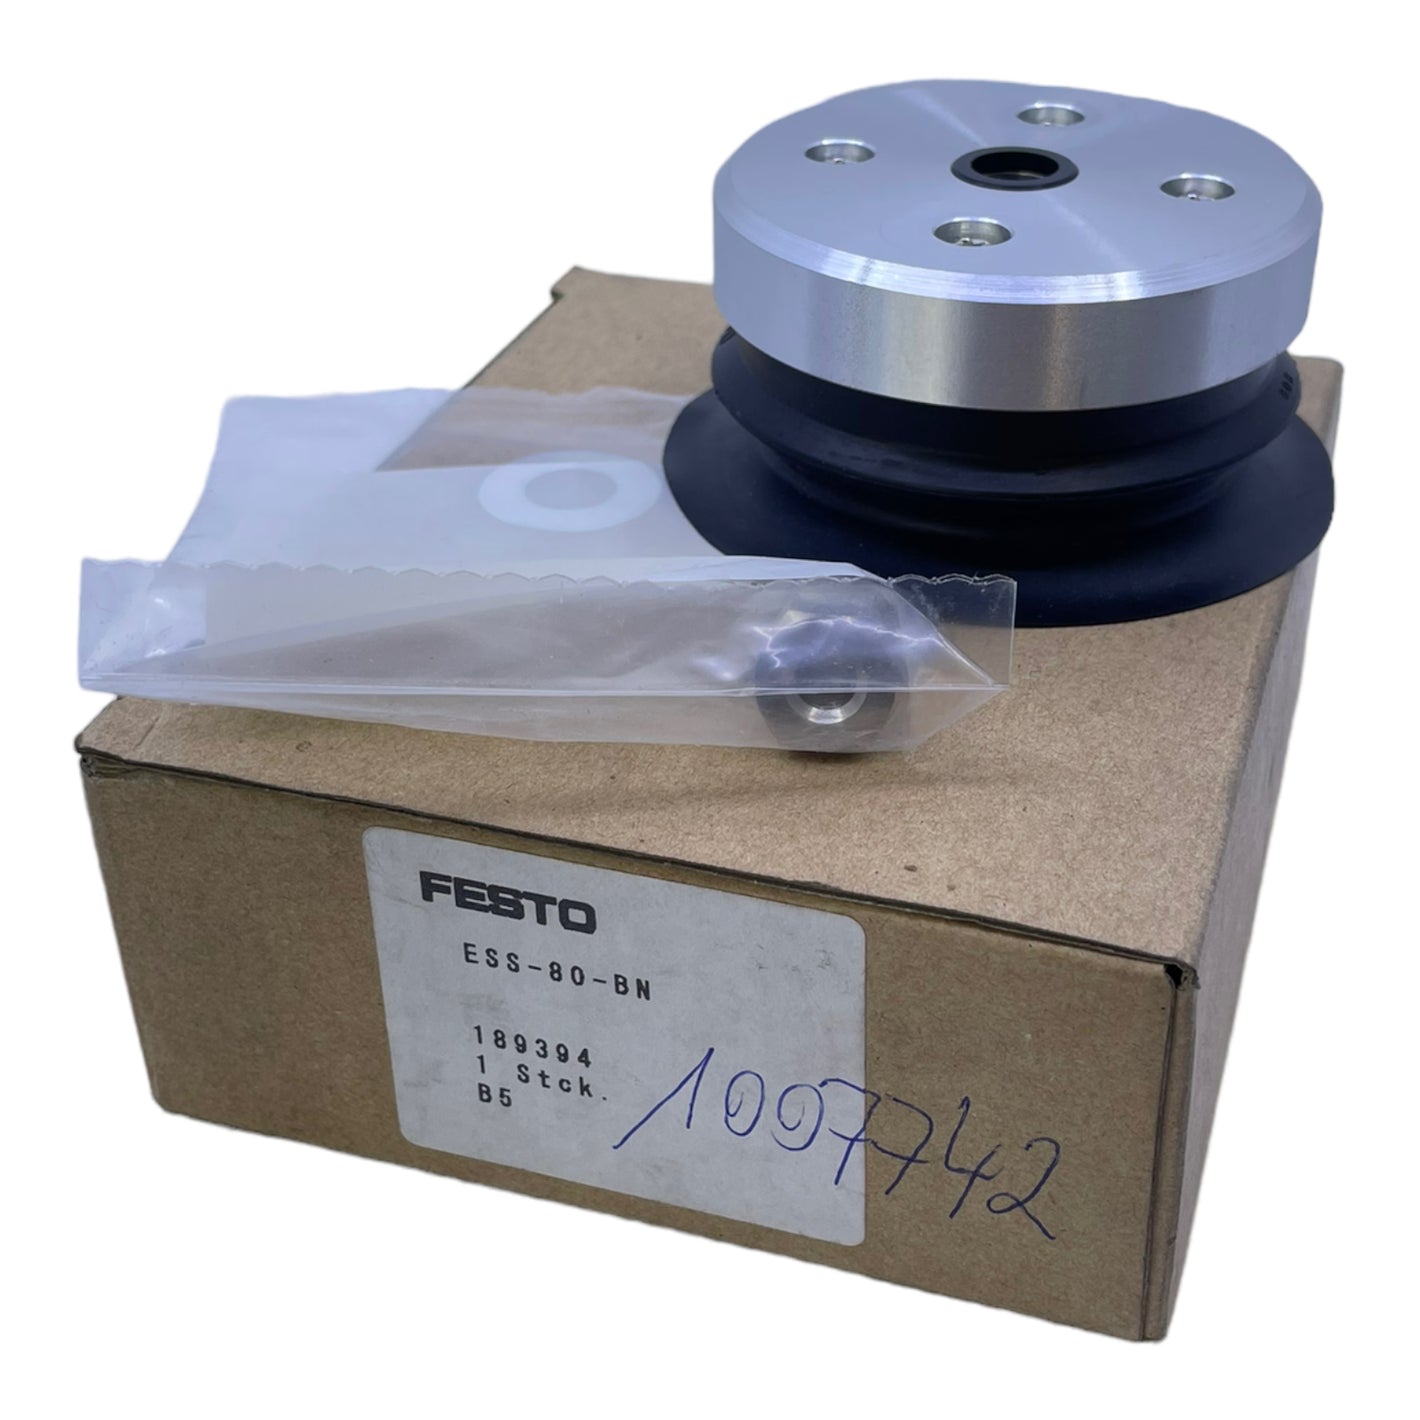 Festo ESS-80-BN vacuum suction cup 189394 round bellows 1.5-way Vol.63,900[cm³] 